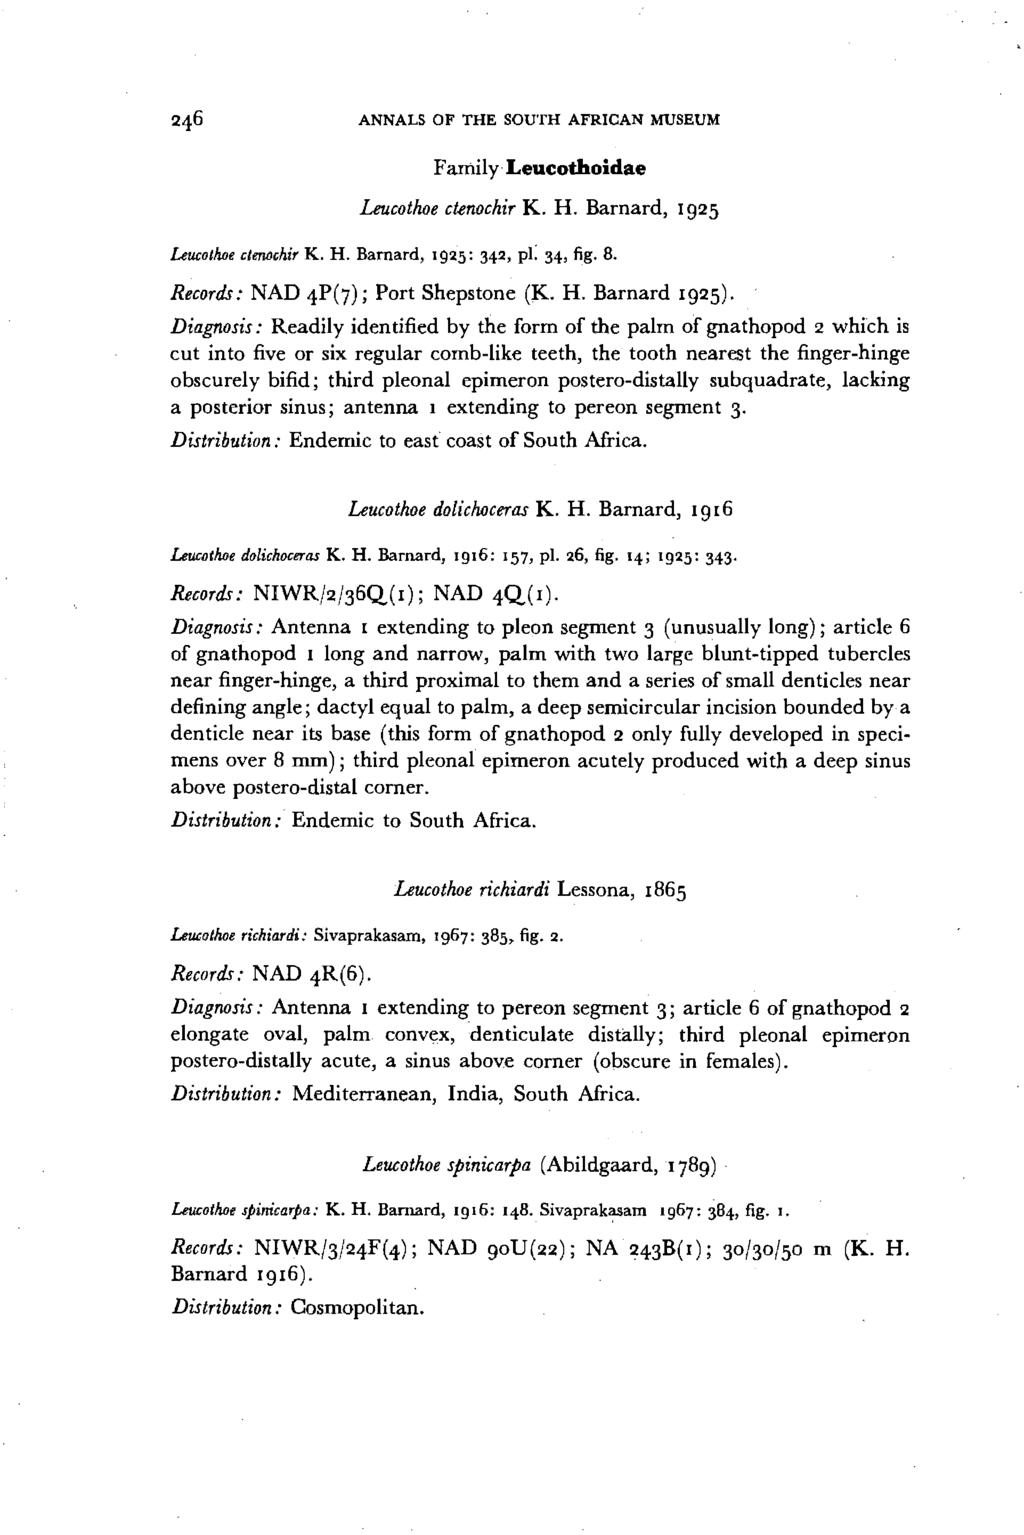 ANNALS OF THE SOUTH AFRICAN MUSEUM Family Leucothoidae Leucothoe ctenochir K. H. Barnard, 1925 Leucothoe clentj,hir K. H. Barnard, 1925: 342, pi: 34, fig. 8. Records: NAD 4P(7); Port Shepstone (K. H. Barnard 1925).